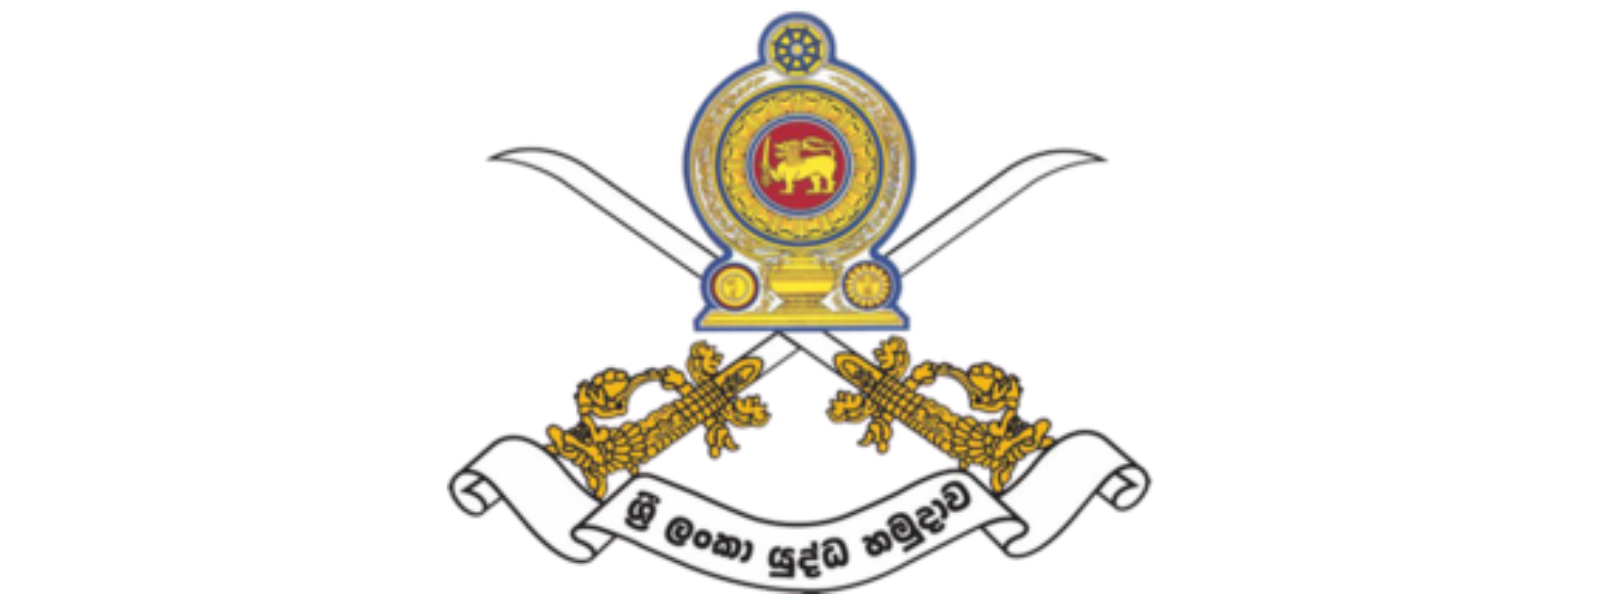 Sri Lanka army marks the 70th anniversary